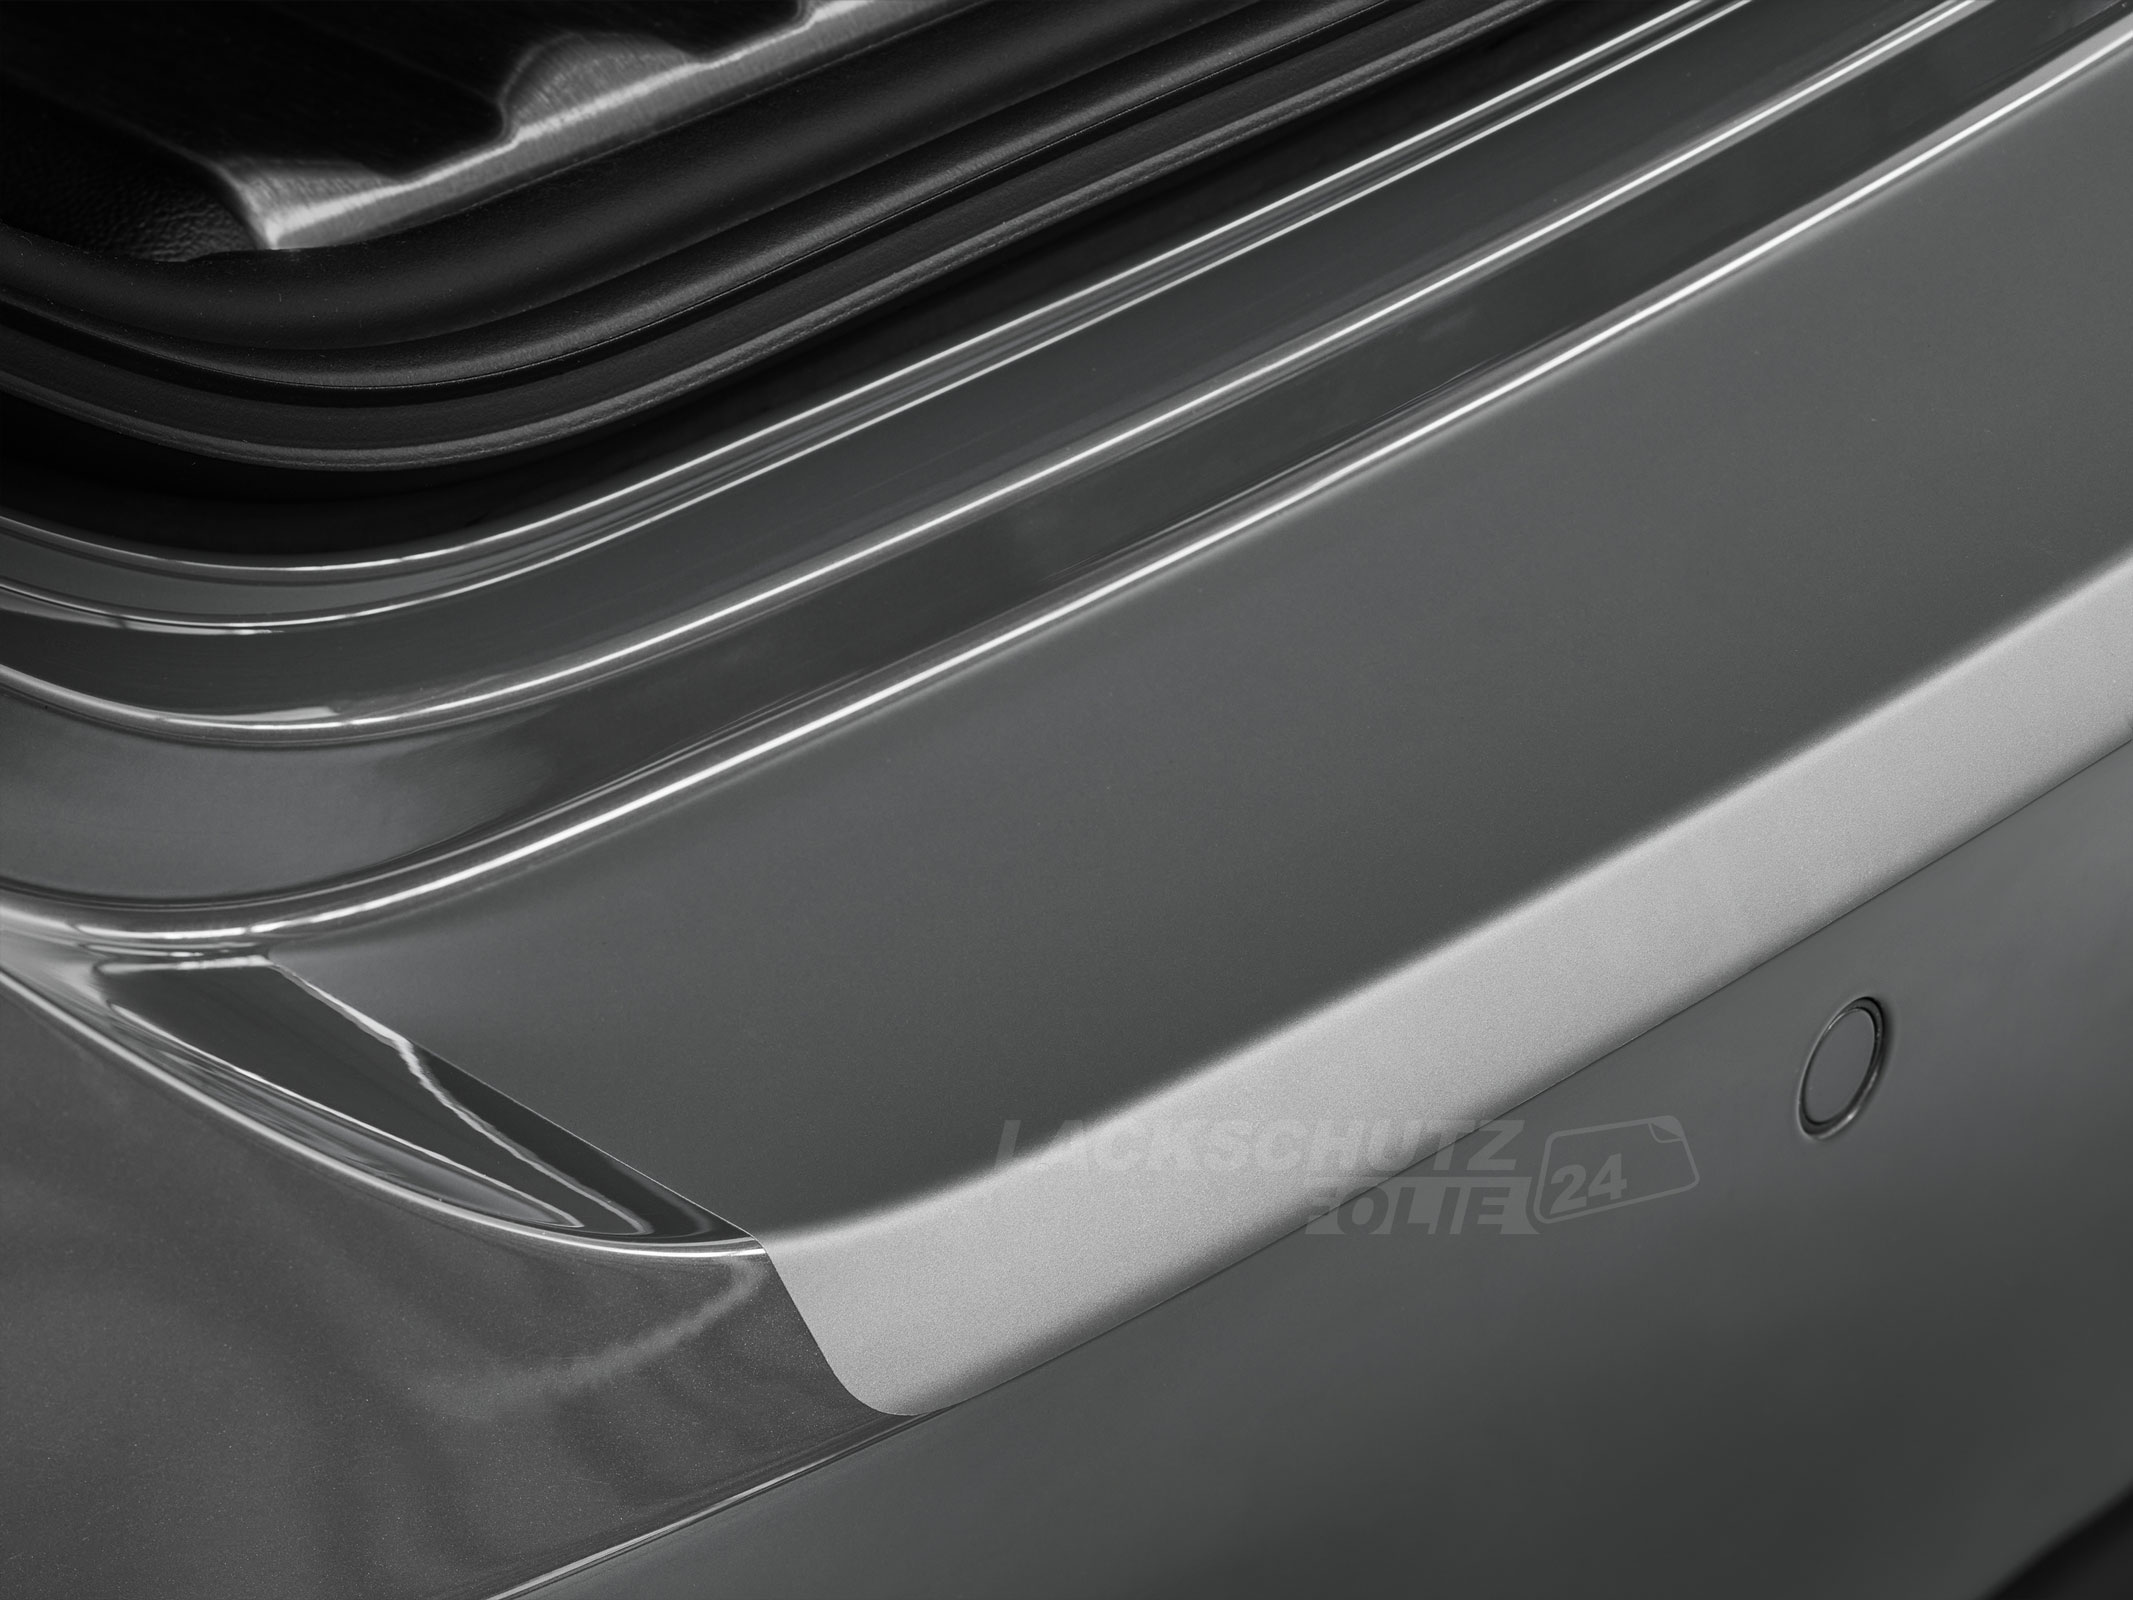 Ladekantenschutzfolie - Transparent Glatt MATT 110 µm stark  für BMW MINI Typ R55/R56, BJ 2006-2014